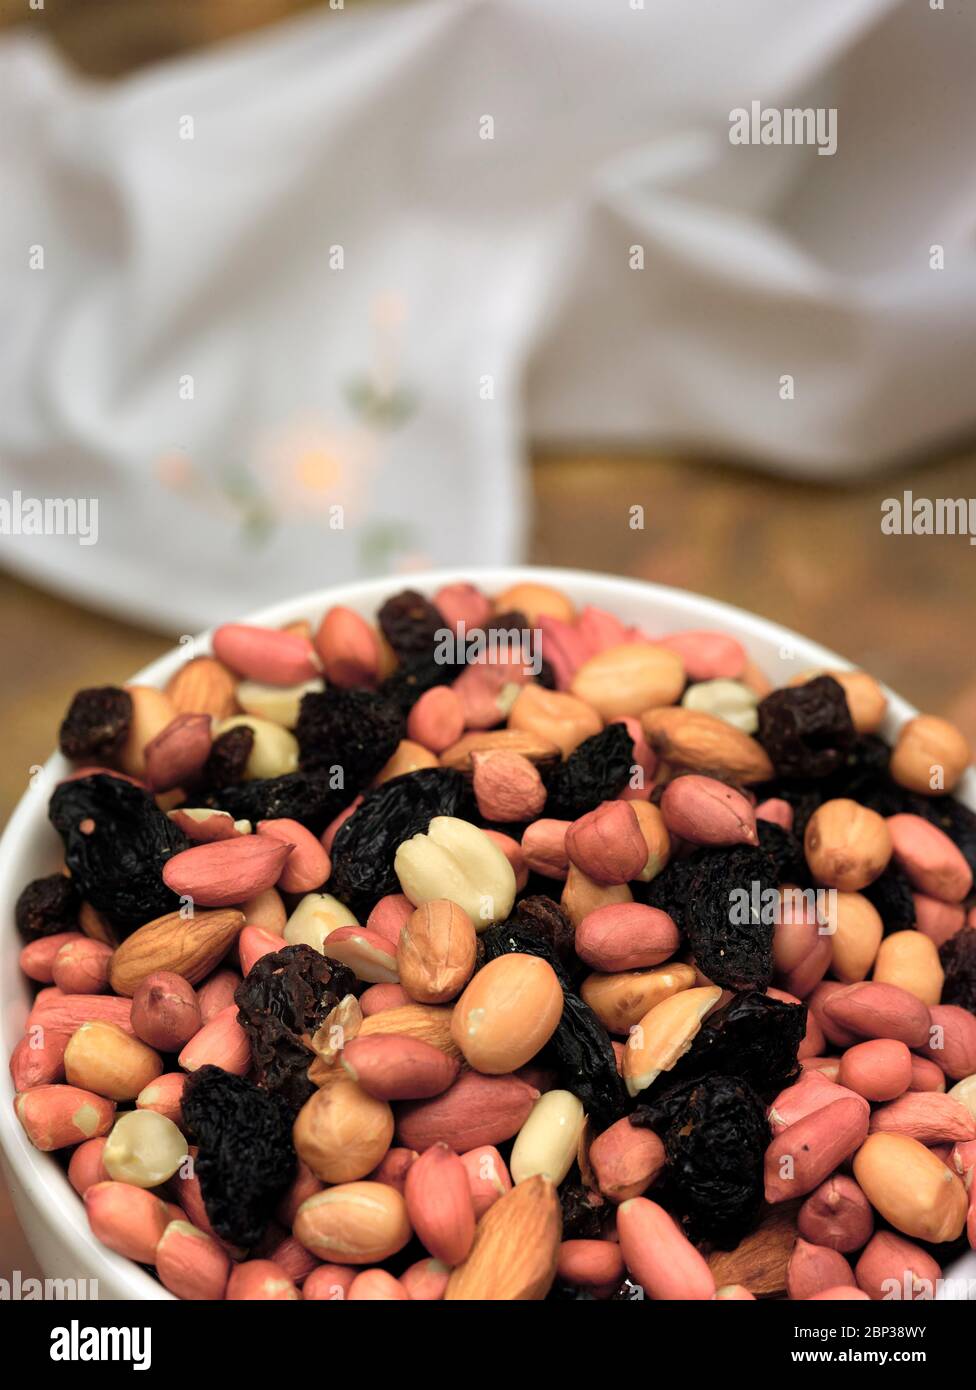 Mixed nuts (peanuts, walnuts and pecans) food close-up still-life Stock Photo